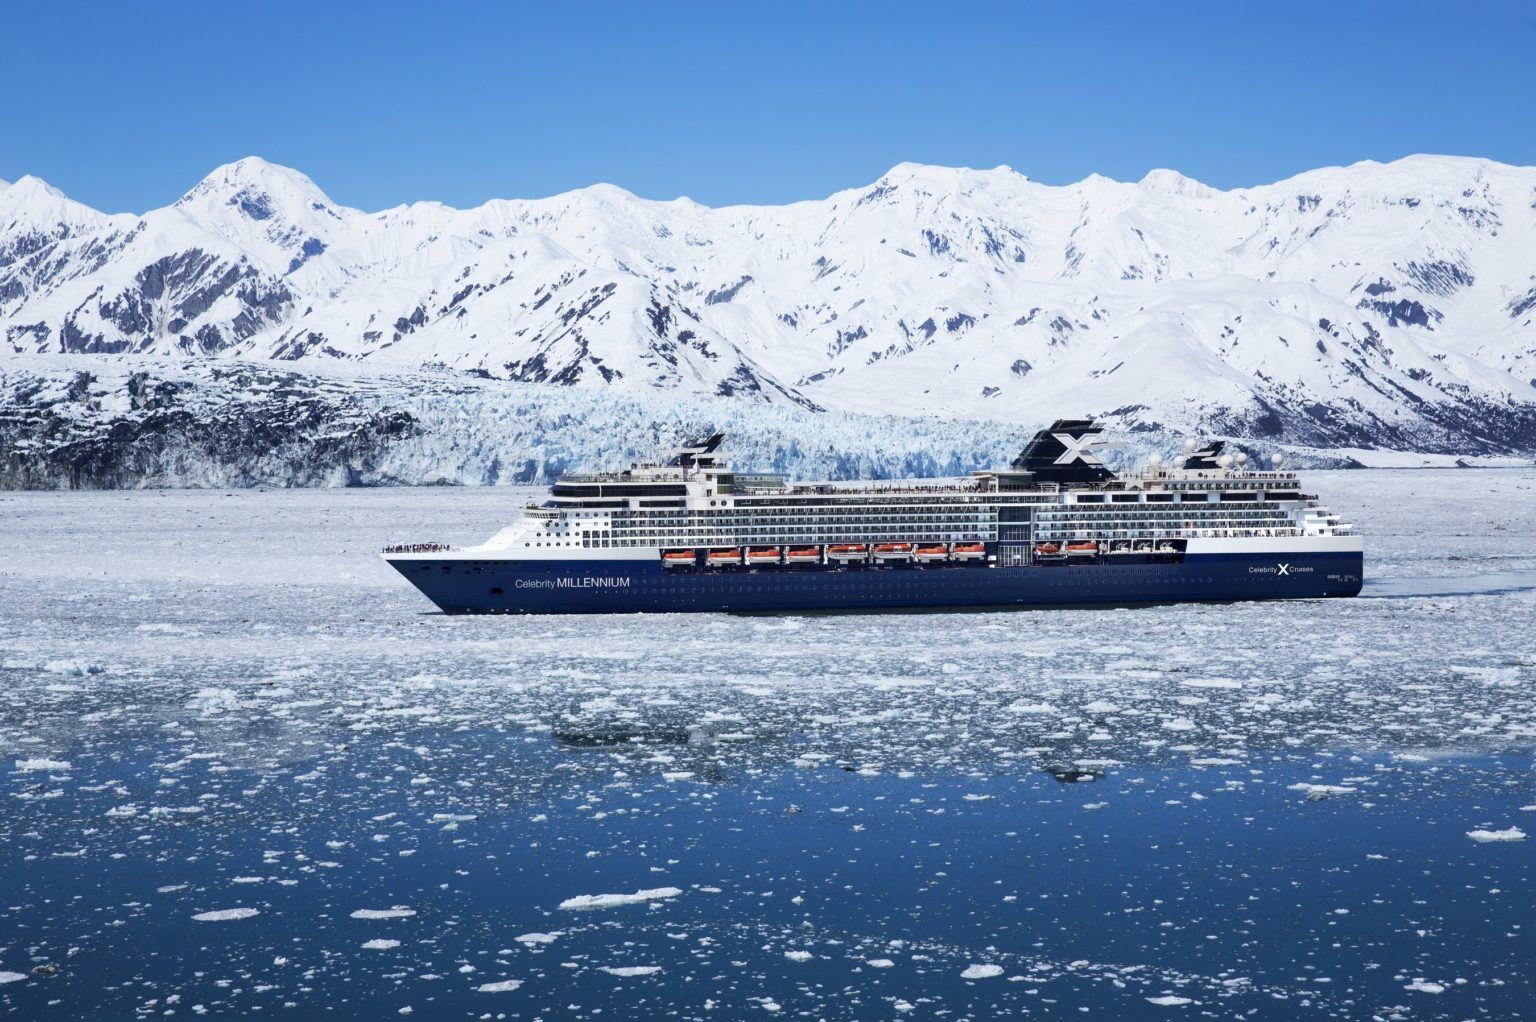 celebrity millennium alaska cruise review